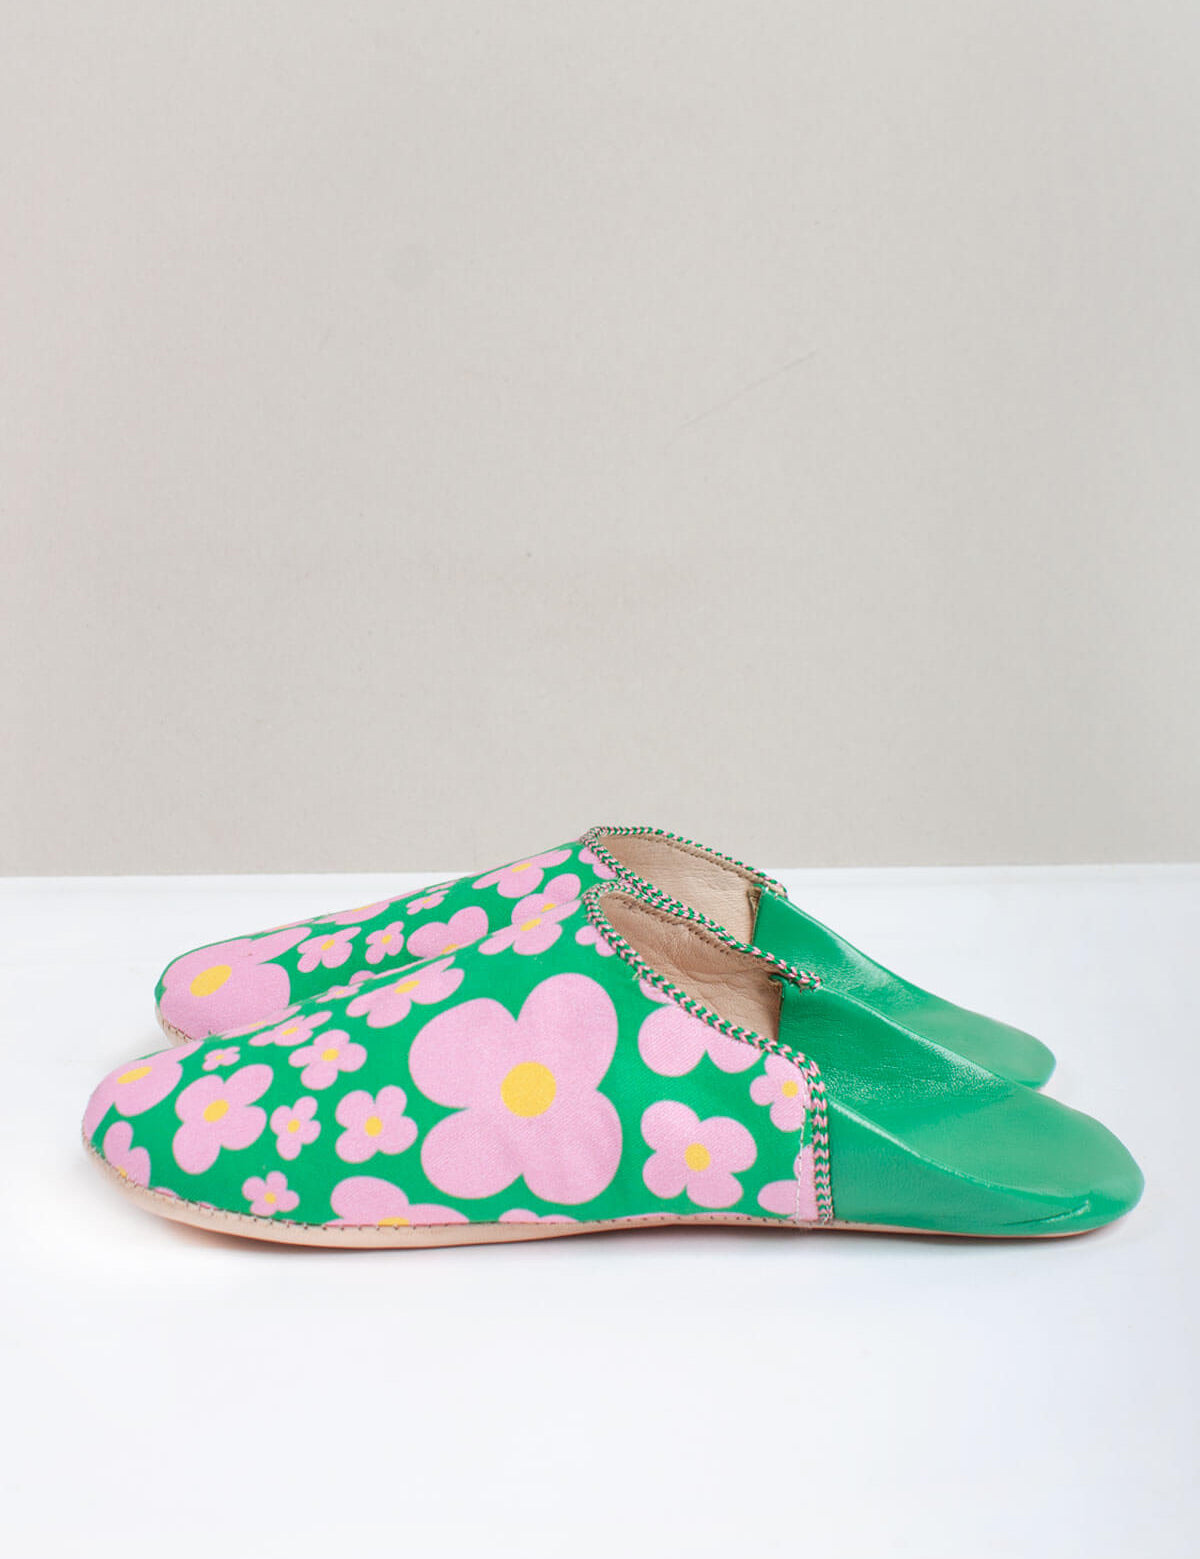 Bohemia-design-margot-babouche-slippers-green-leather-pink-flowers.jpg